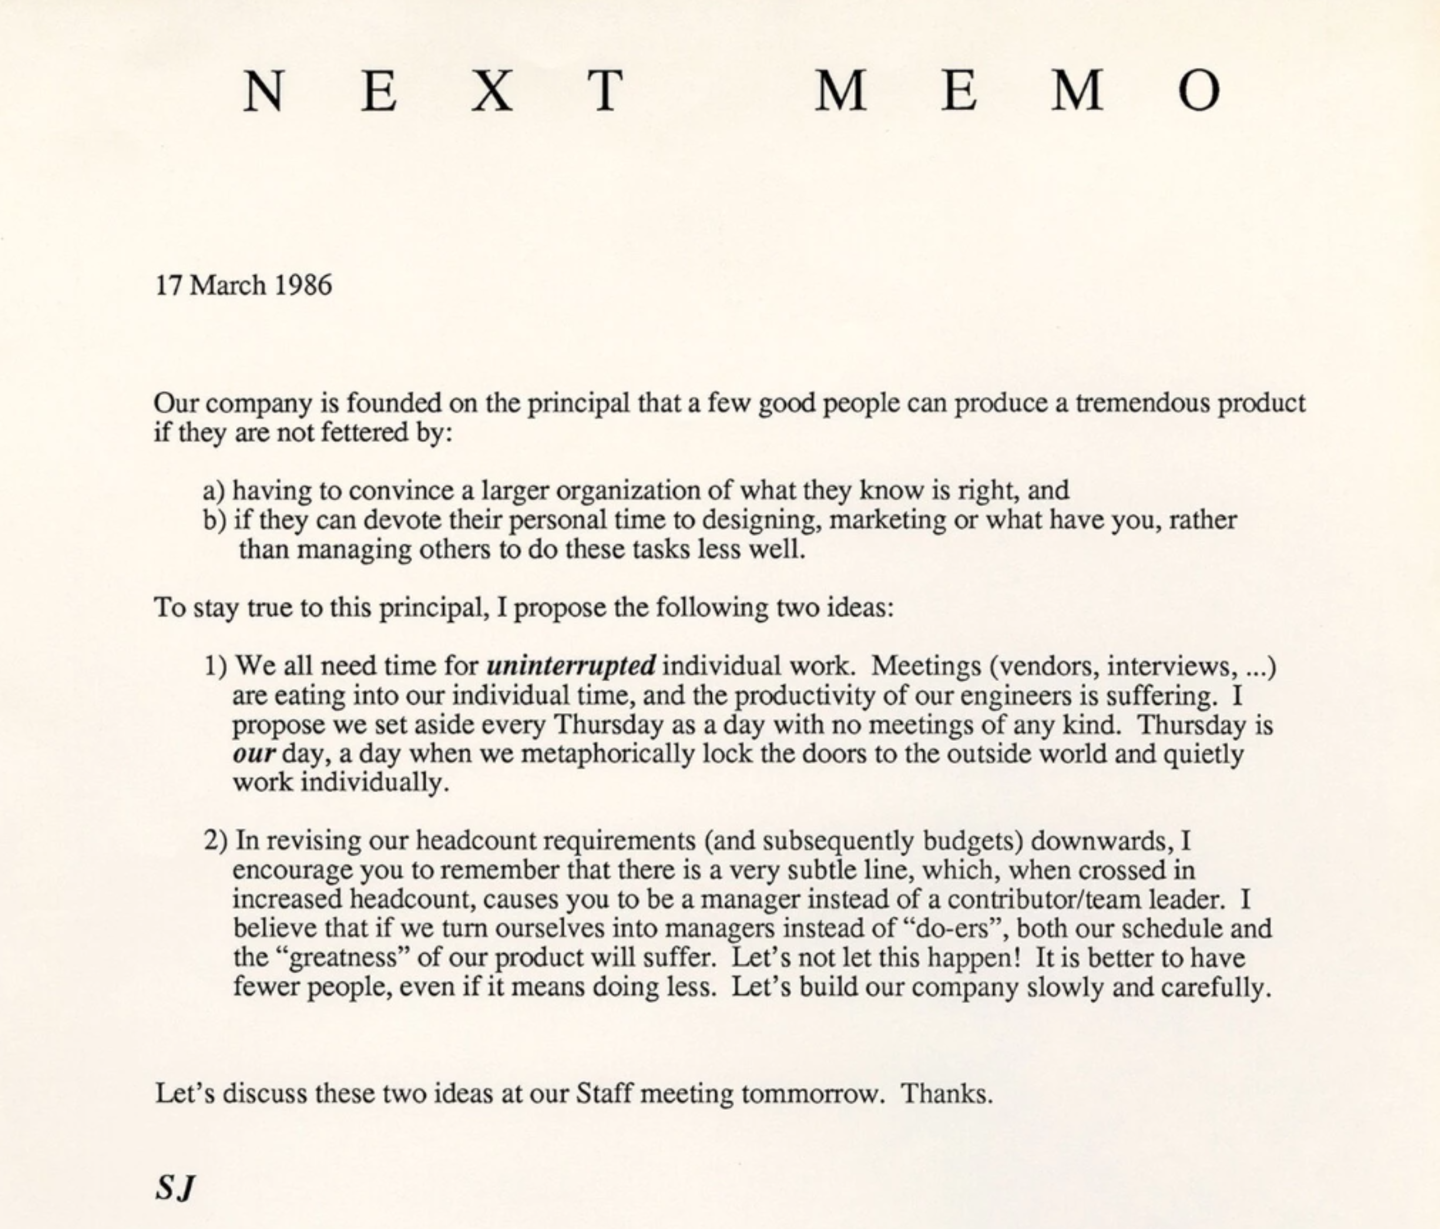 La carta de Steve Jobs en la que busca limitar la productividad